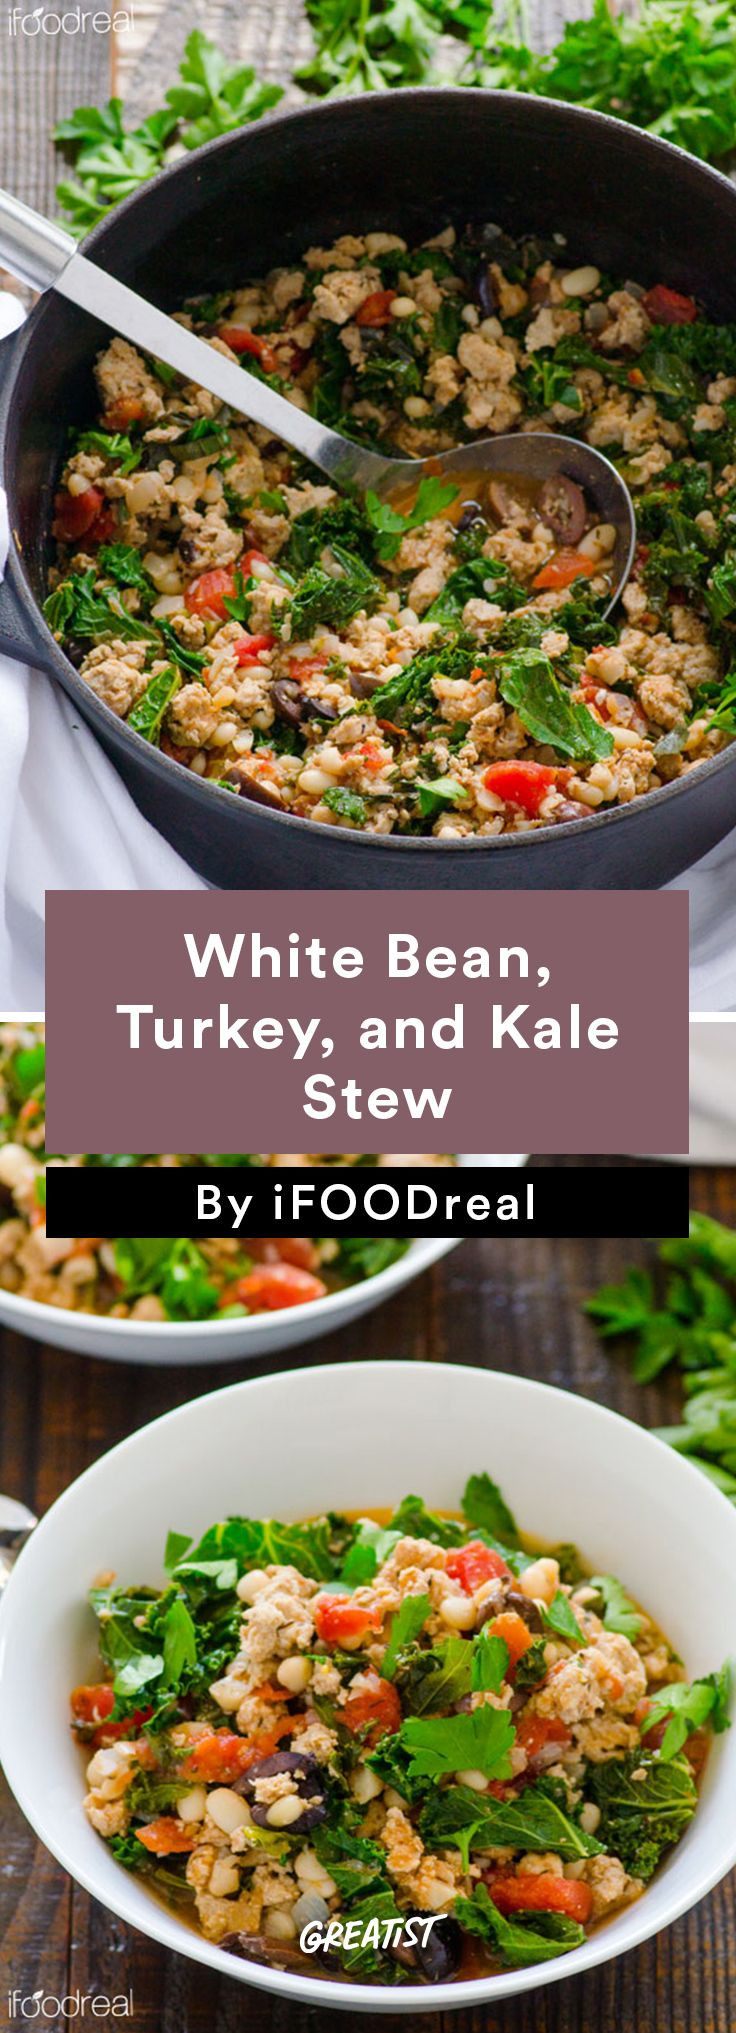 Healthy Dinner Ideas With Ground Turkey
 100 Healthy Dinner Recipes on Pinterest